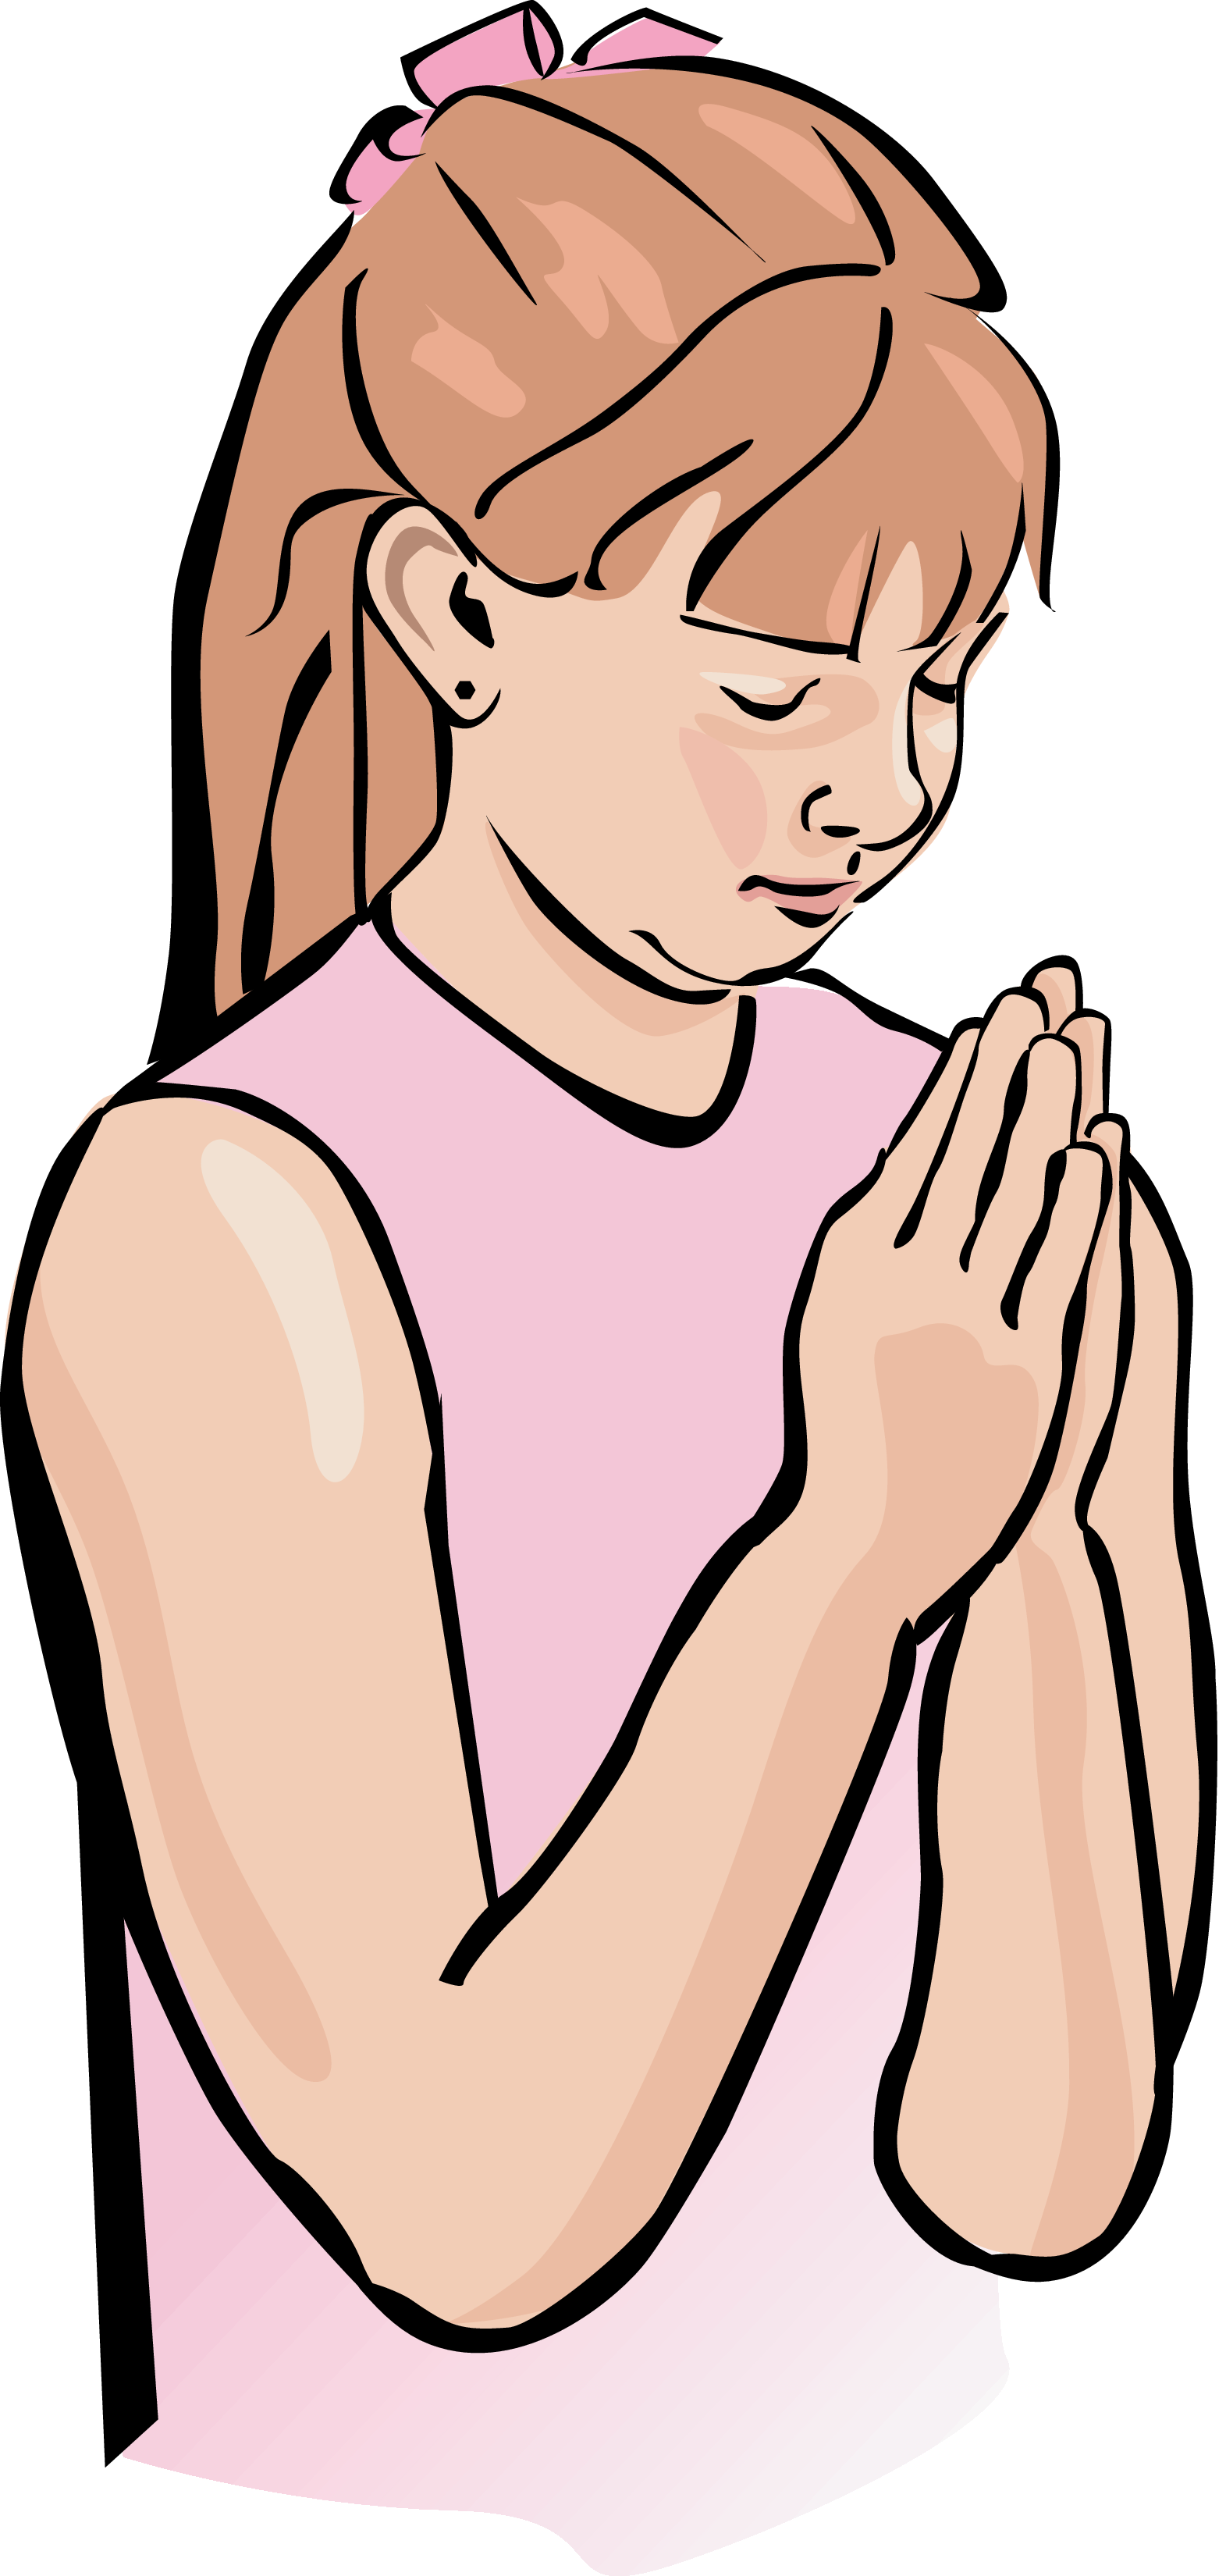 Child Prayer Clipart